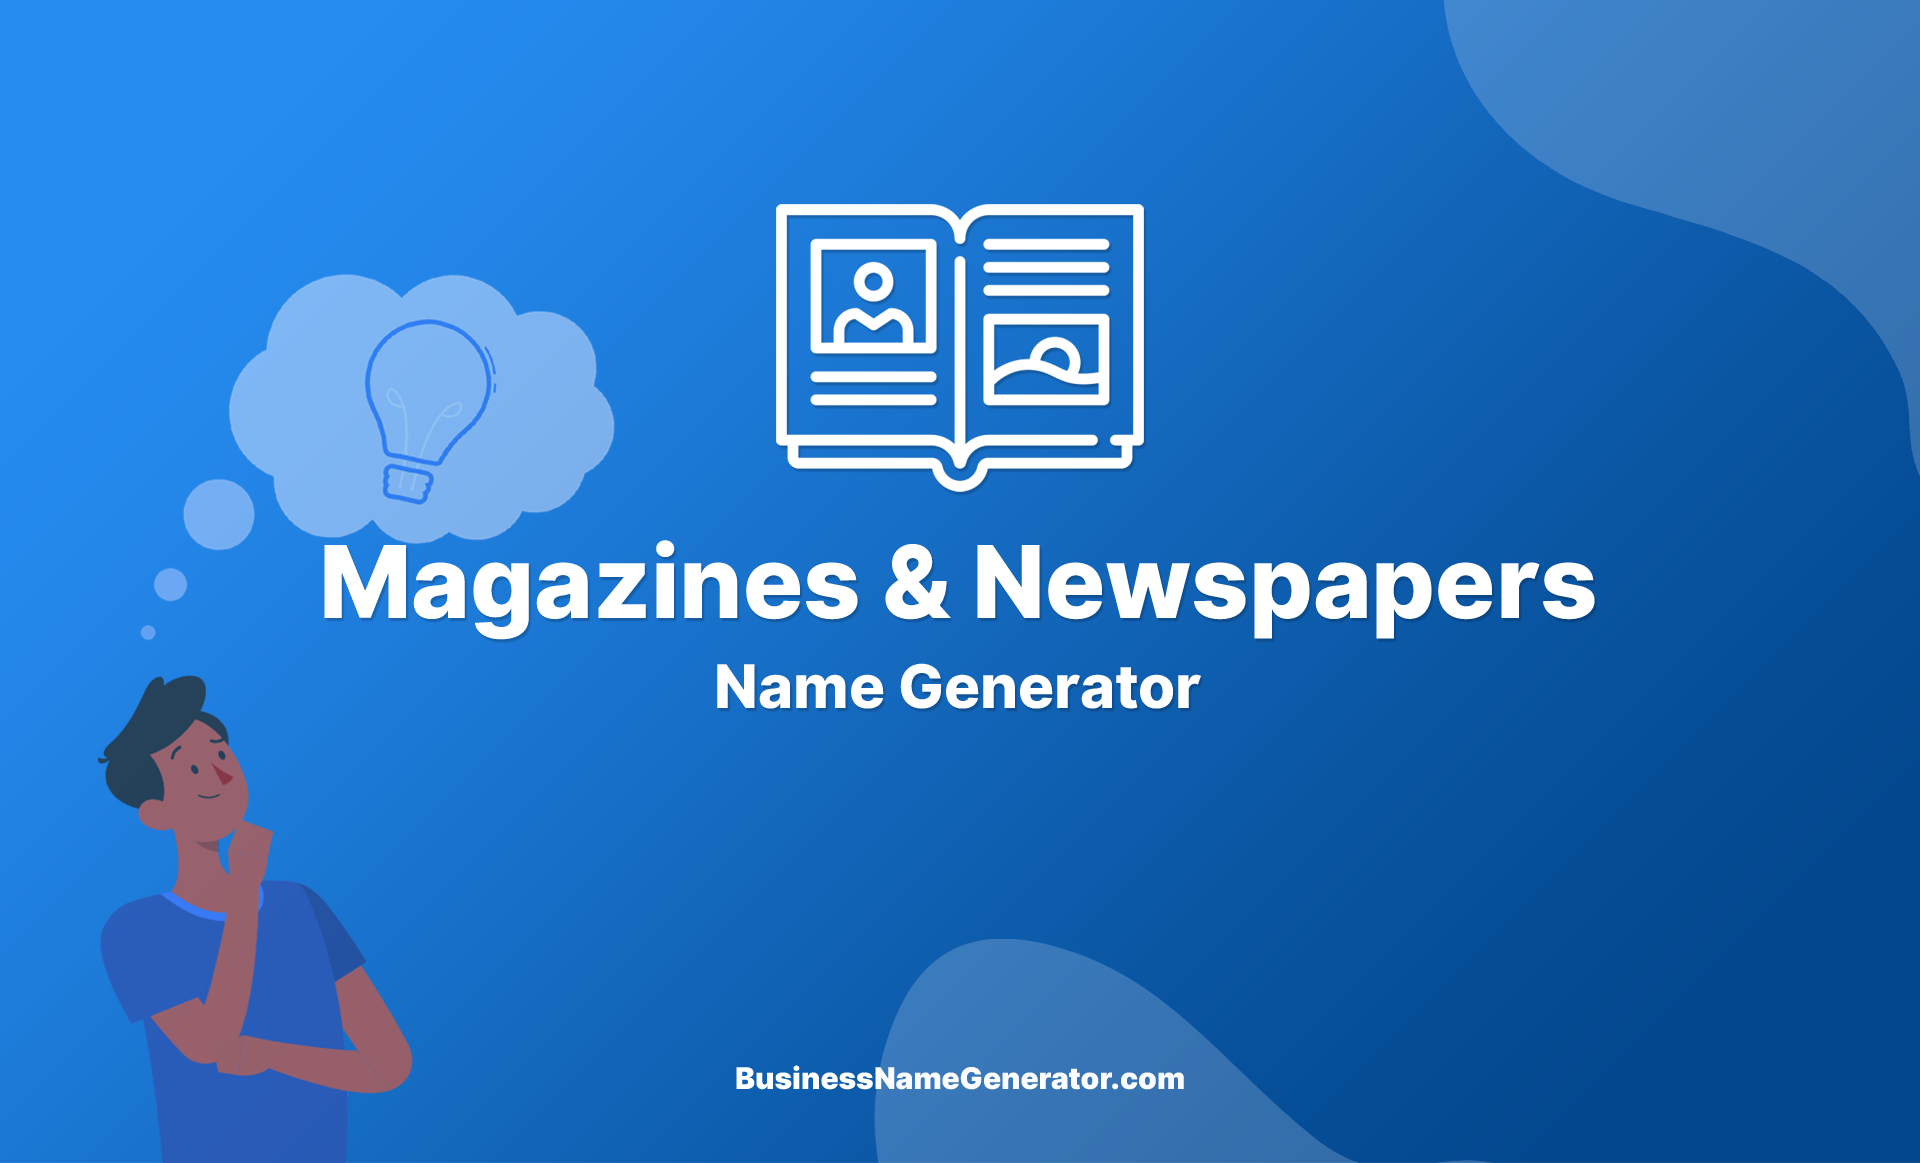 Magazines & Newspapers Name Generator